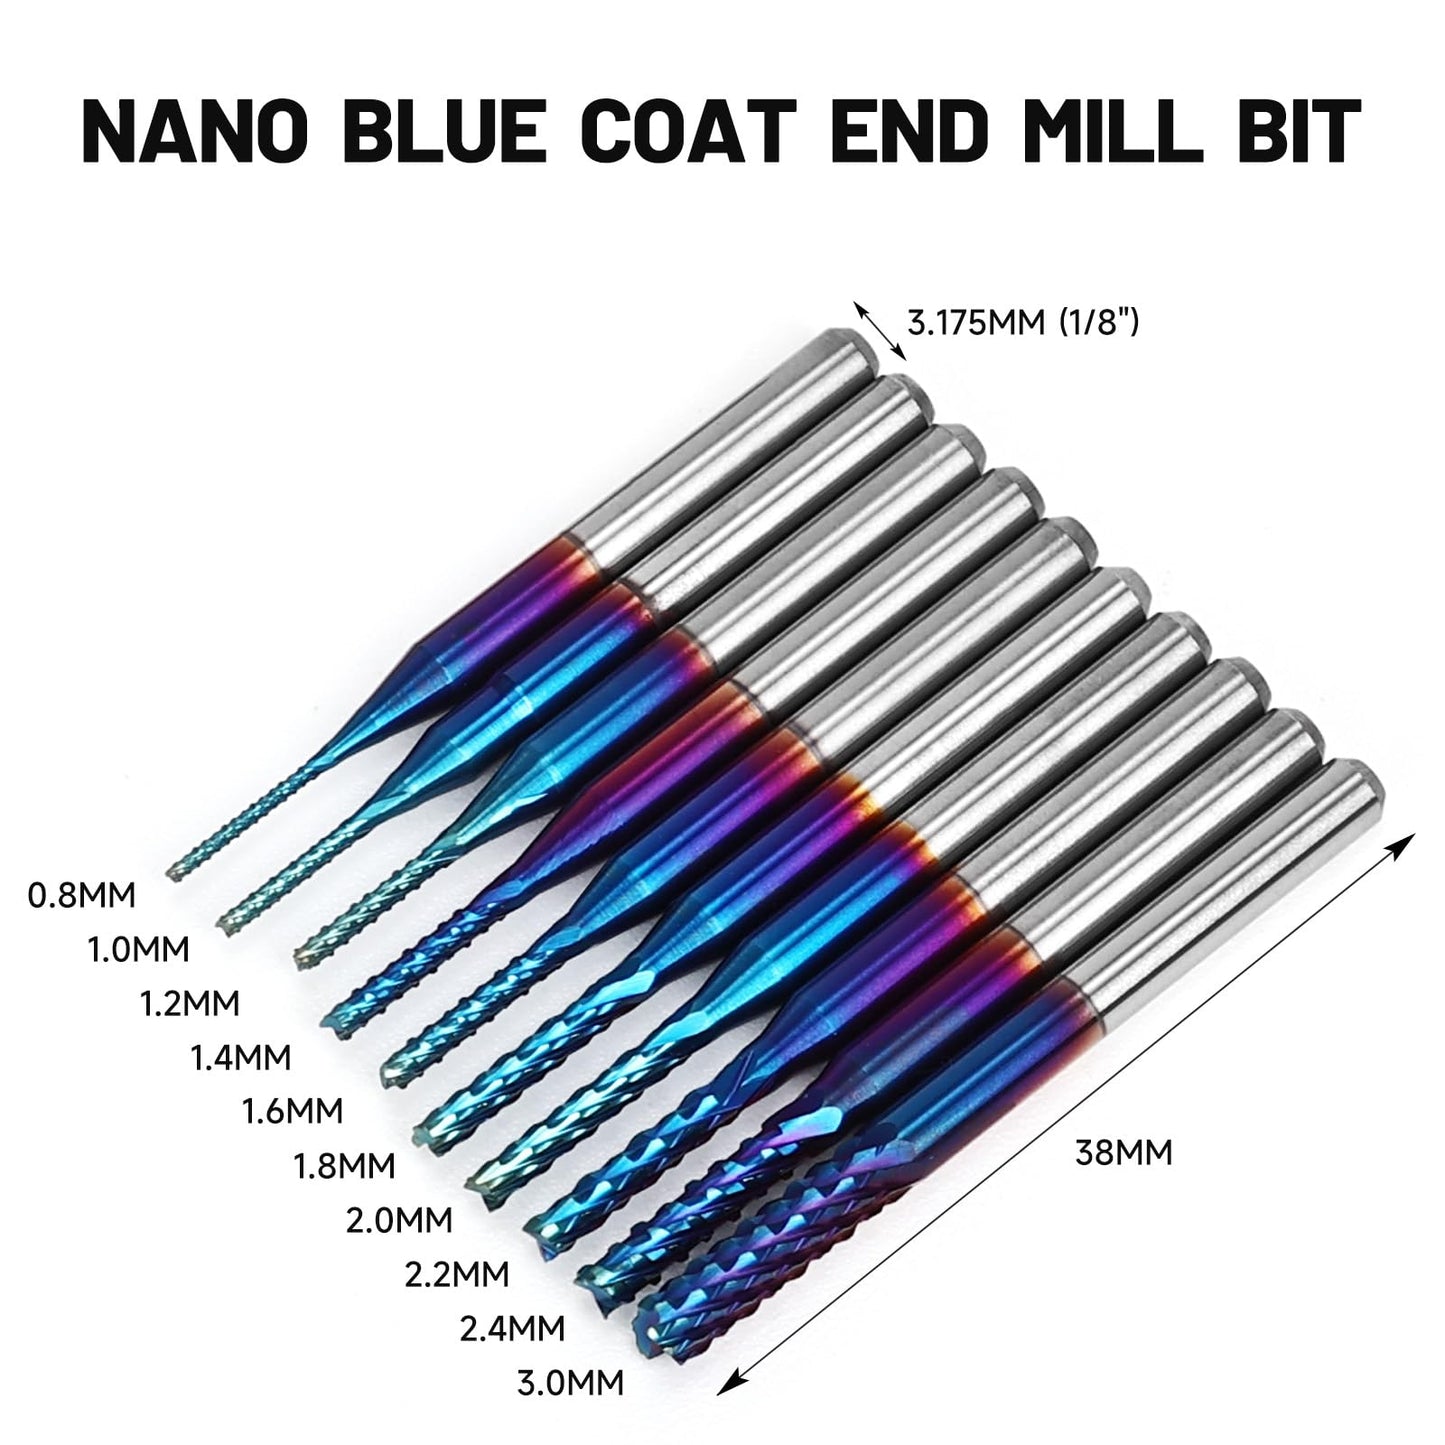 40pcs End Mills CNC Router Bits, 1/8 inch(3.175mm) Shank CNC Milling Carving Bit Set Including 2-Flute Flat & Ball Nose Spiral Bits, Nano Blue Coat &